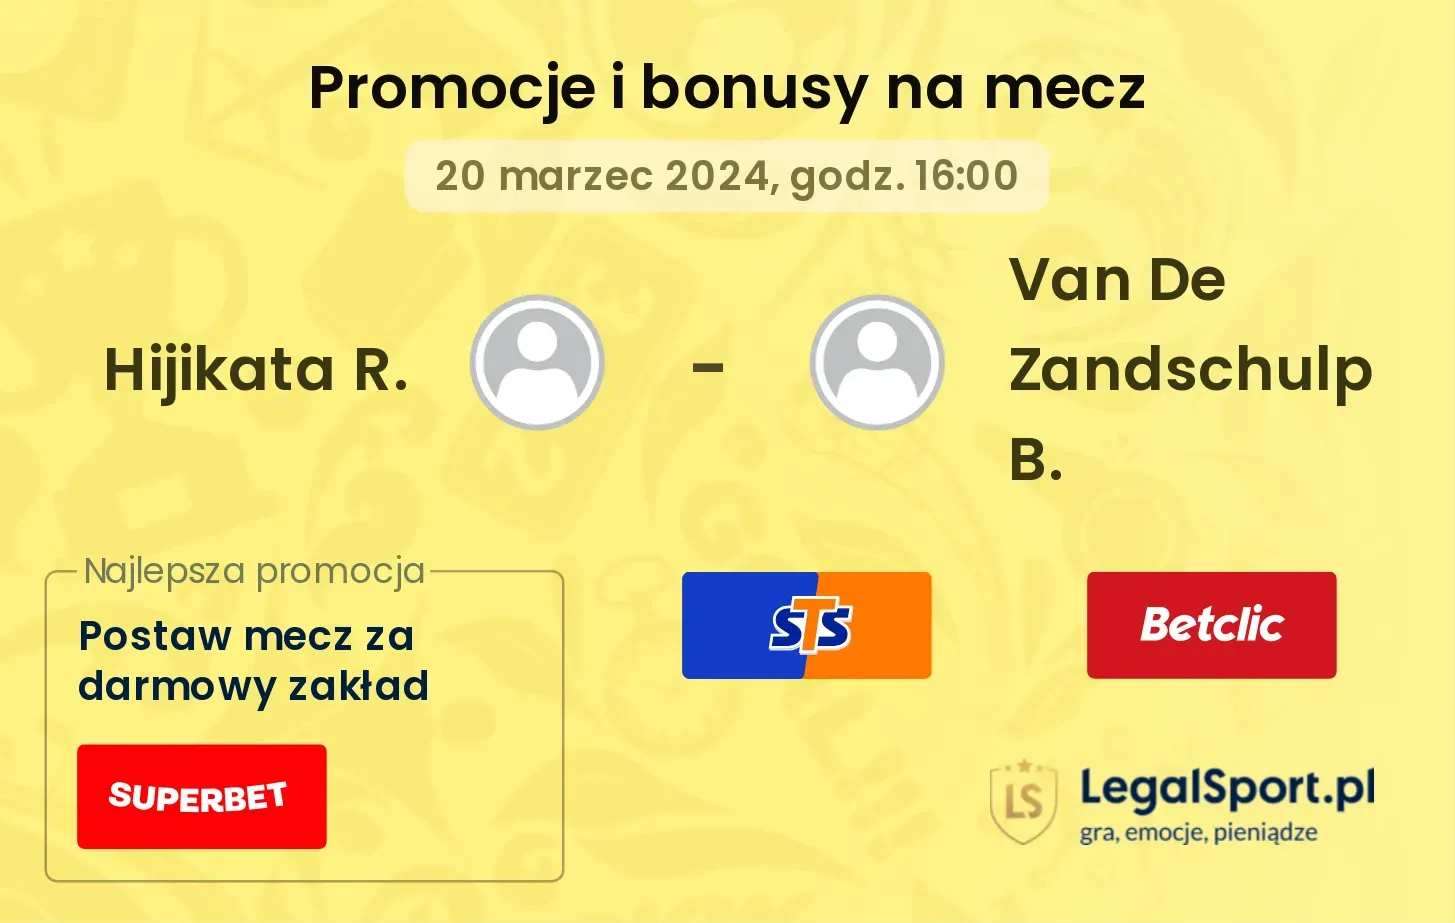 Hijikata R. - Van De Zandschulp B. promocje bonusy na mecz